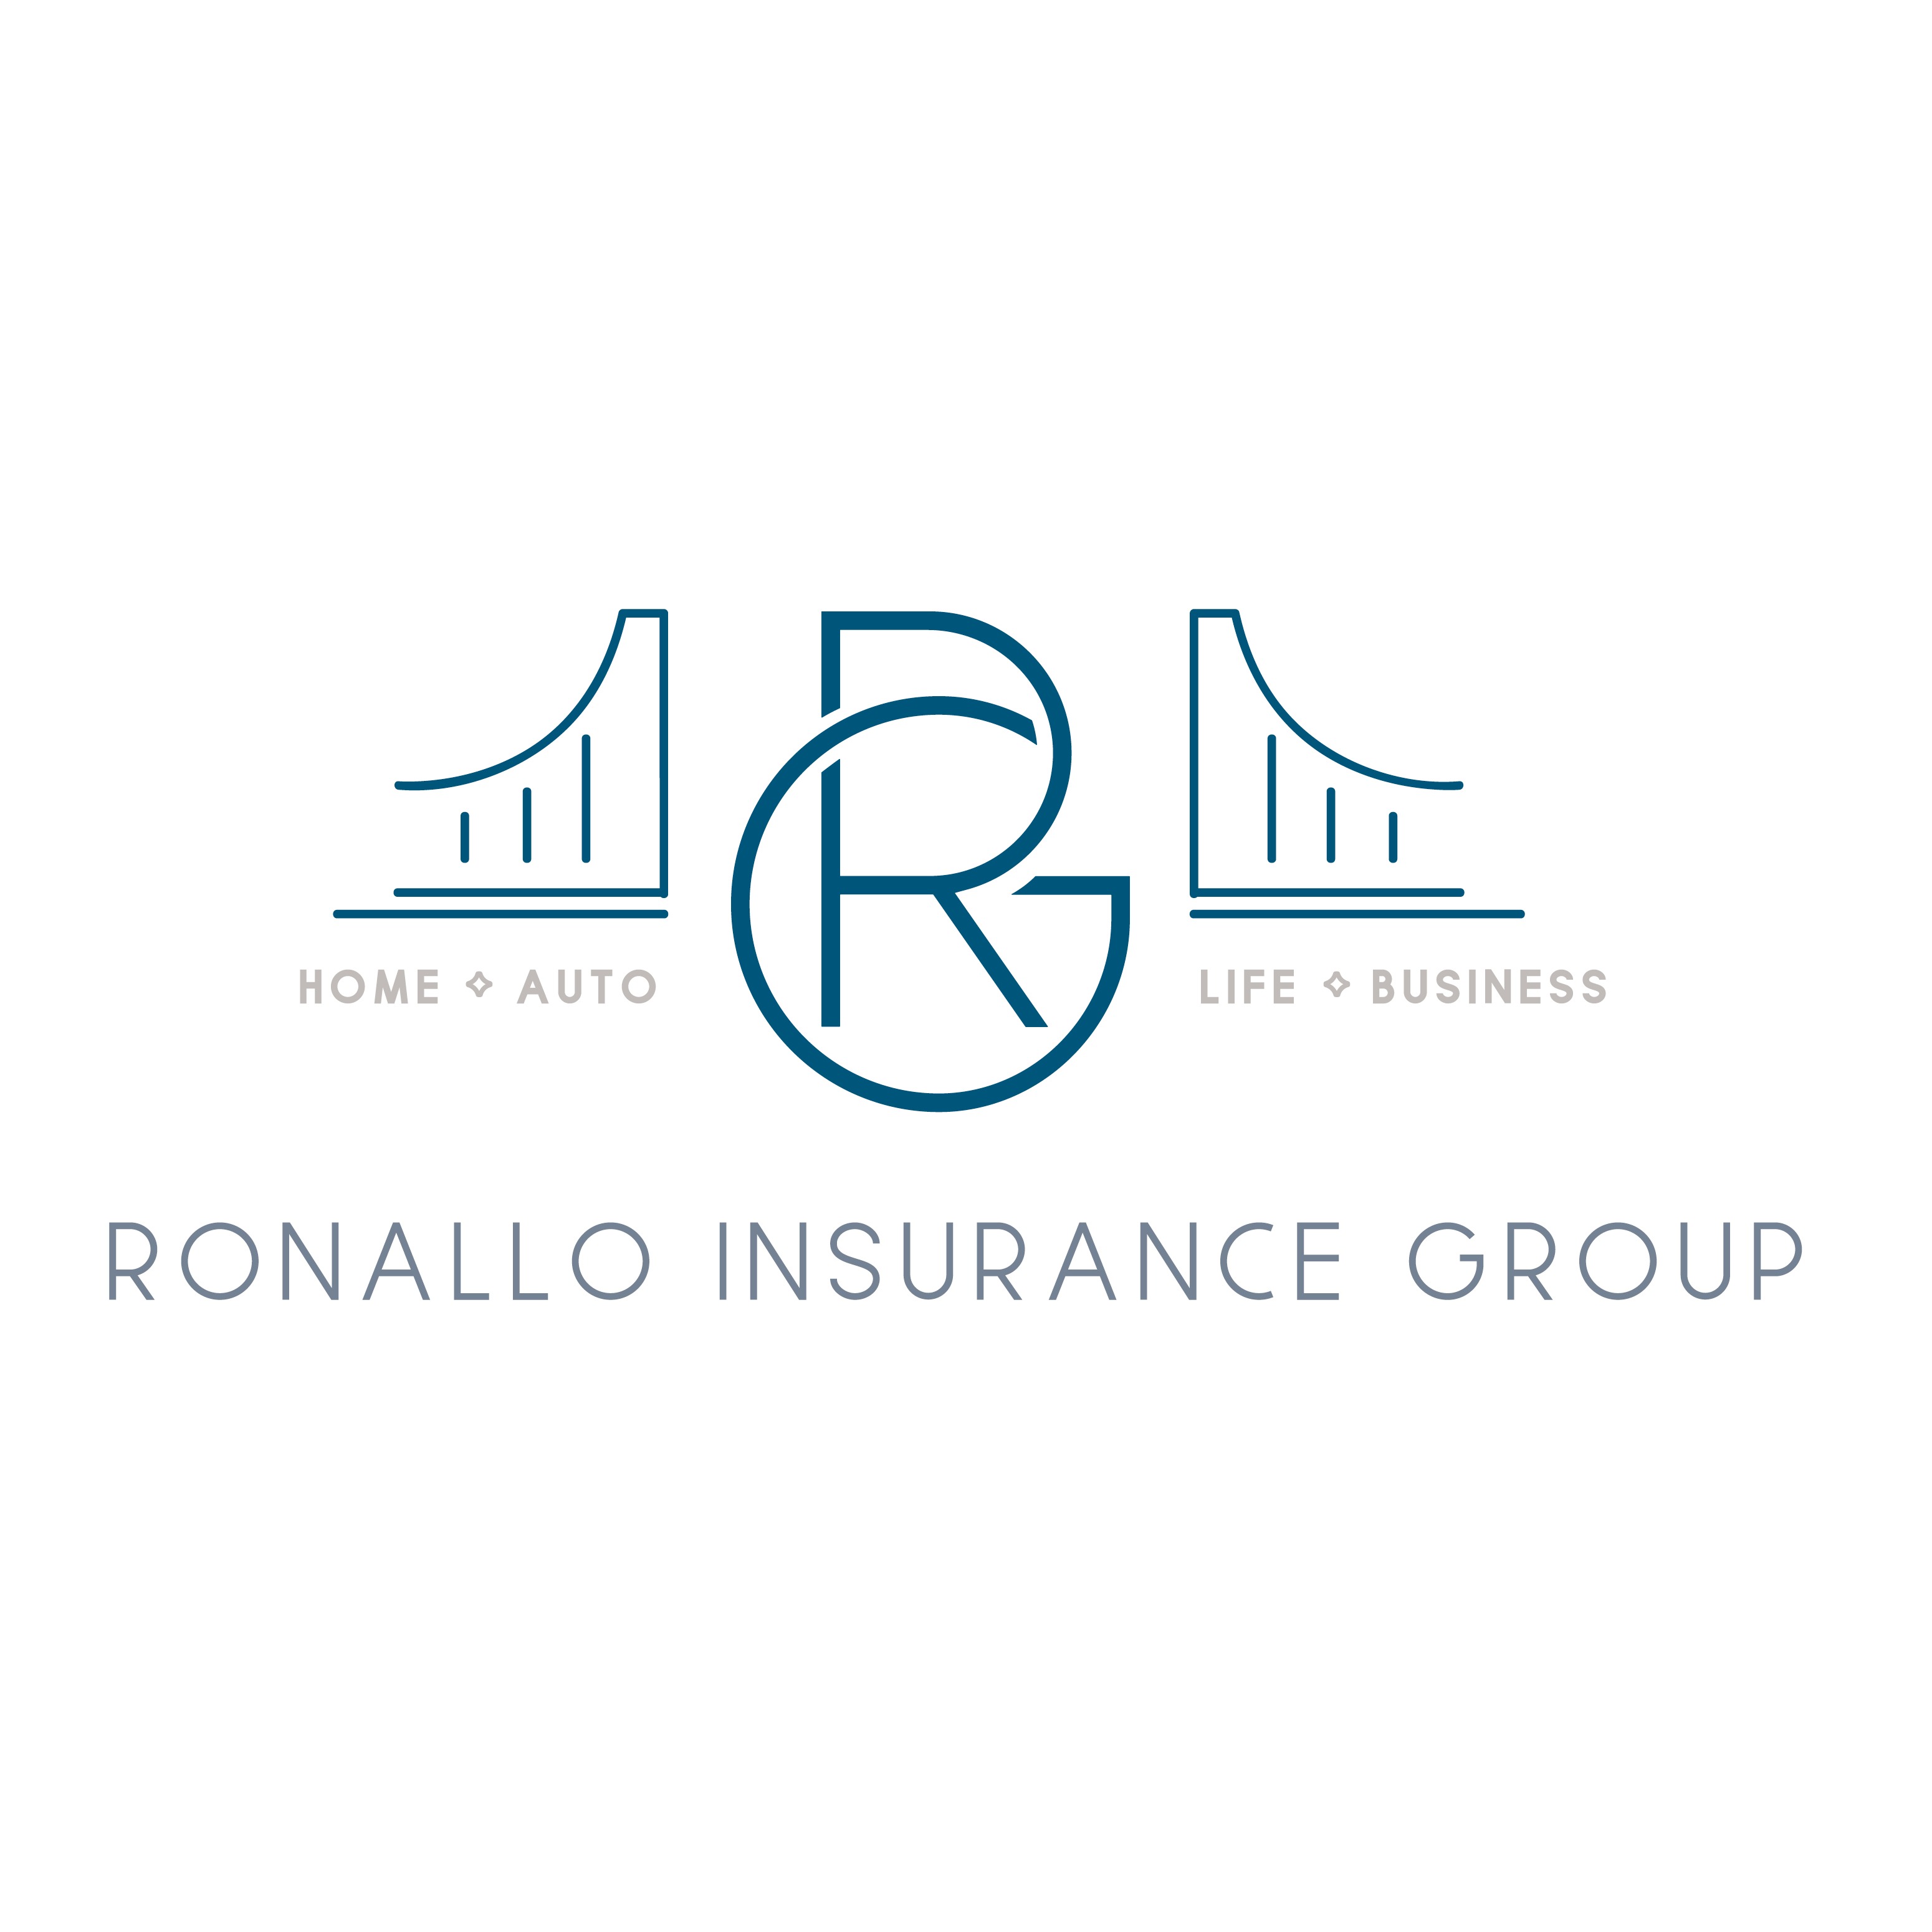 Jeff Ronallo, Insurance Agent